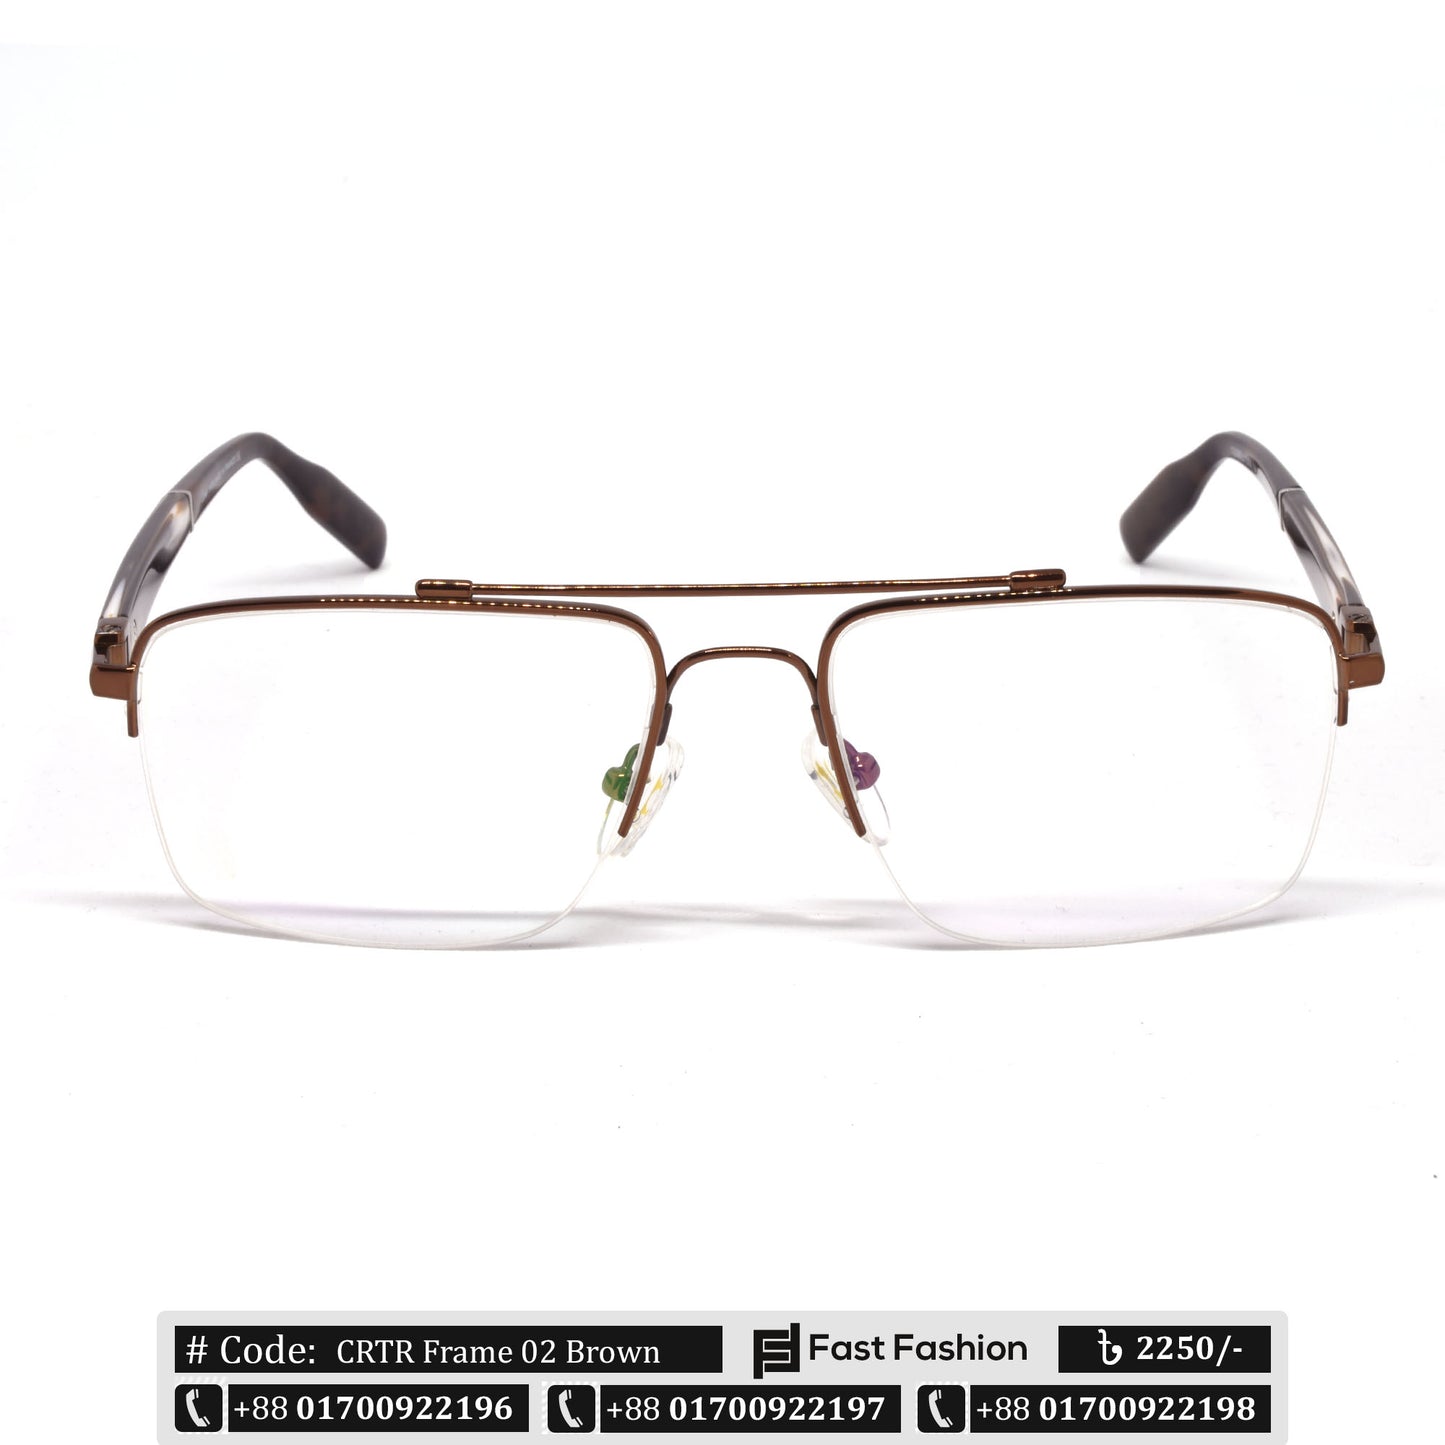 Trendy Stylish Optic Frame | CRTR Frame 02 Brown | Premium Quality